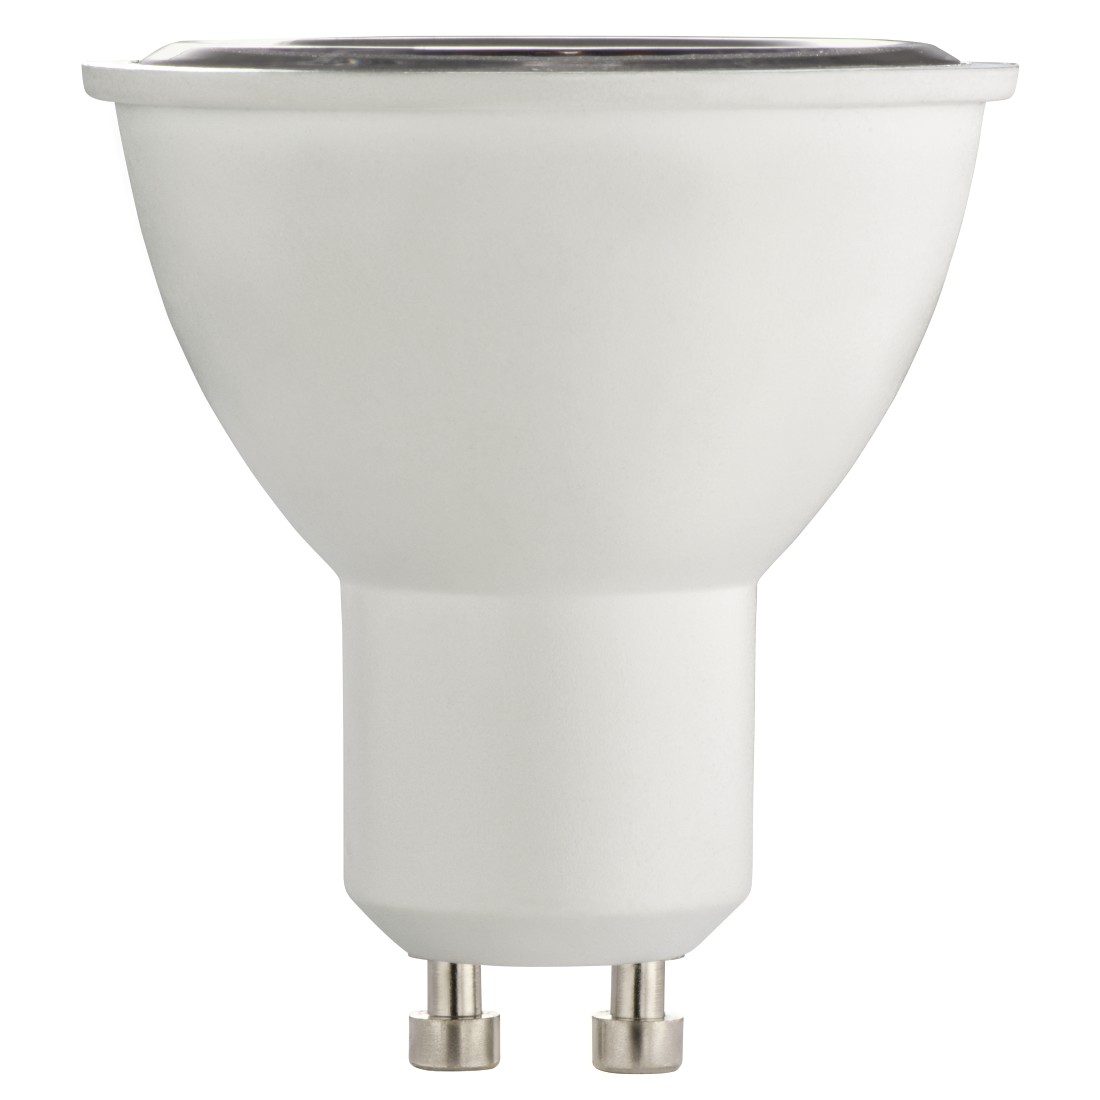 abx High-Res Image - Xavax, LED Bulb, GU10, 400 lm Replaces 55W, PAR16 Reflector Bulb, warm white, RA90